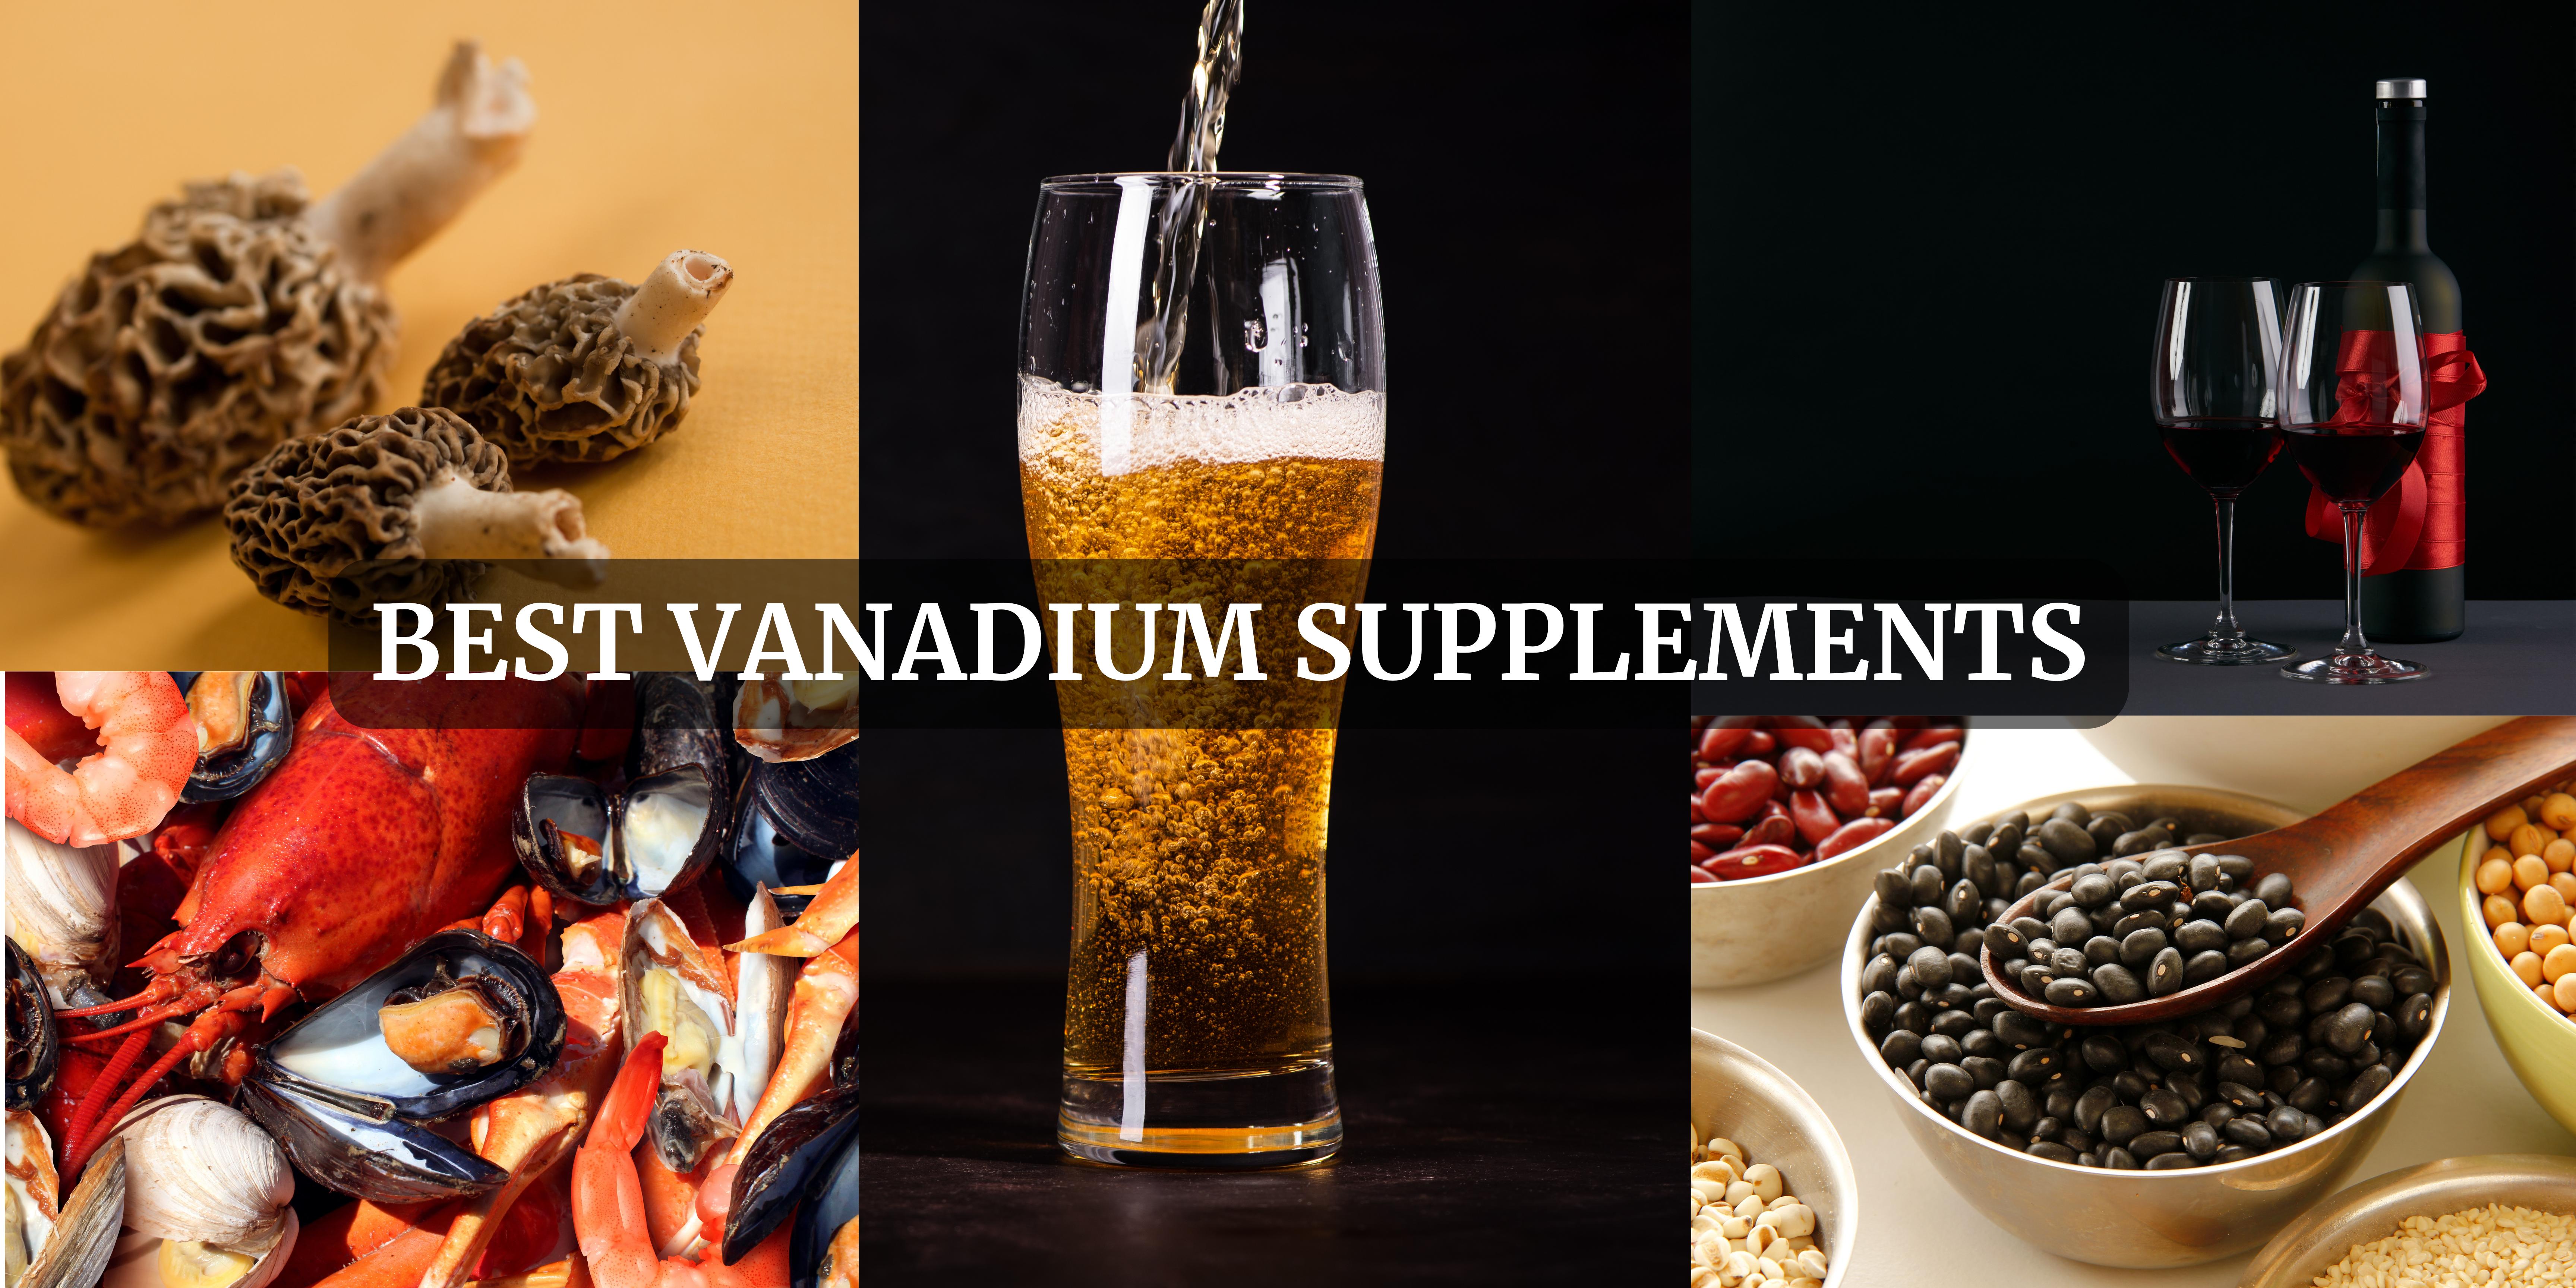 Vanadium Supplements in Germany